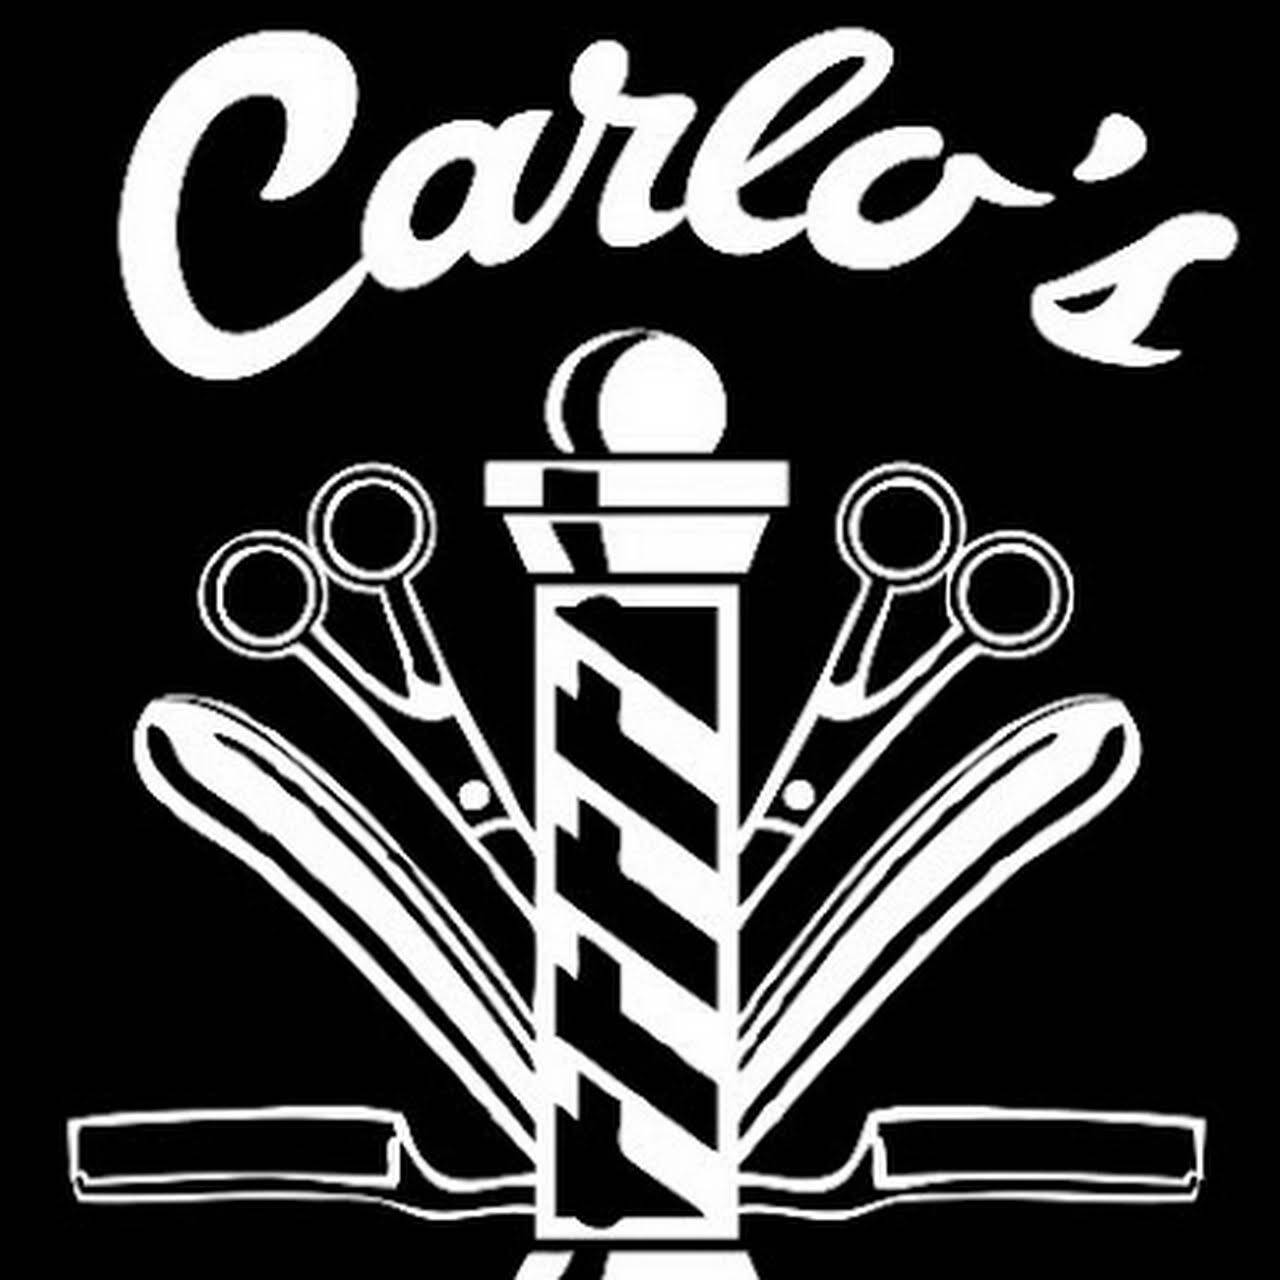 Carlo's Barbershop